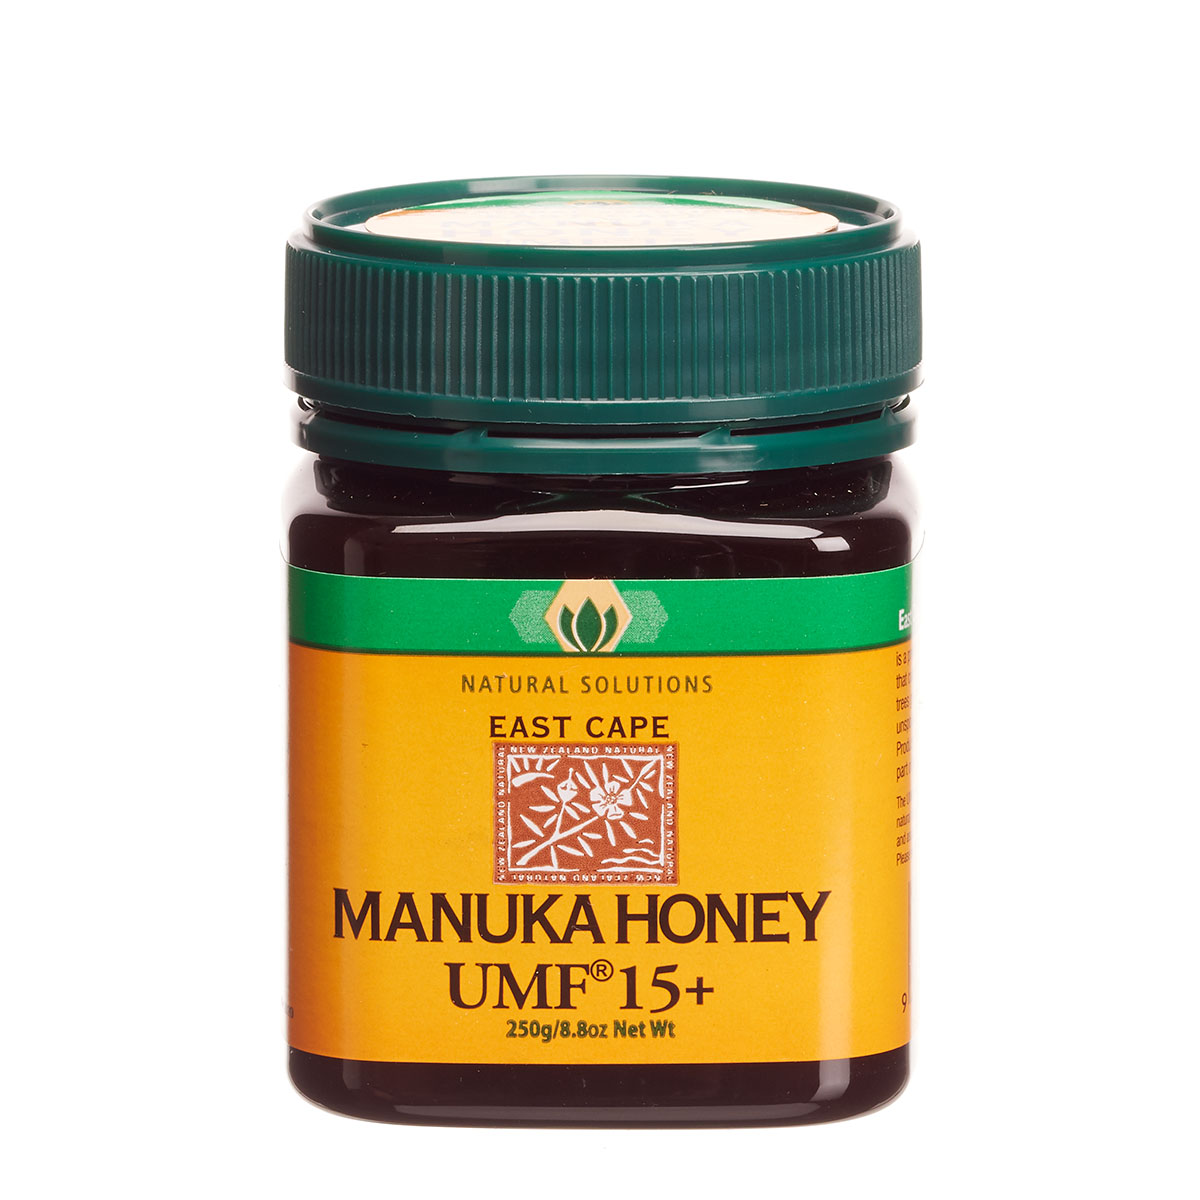 How to Identify Genuine Manuka honey.